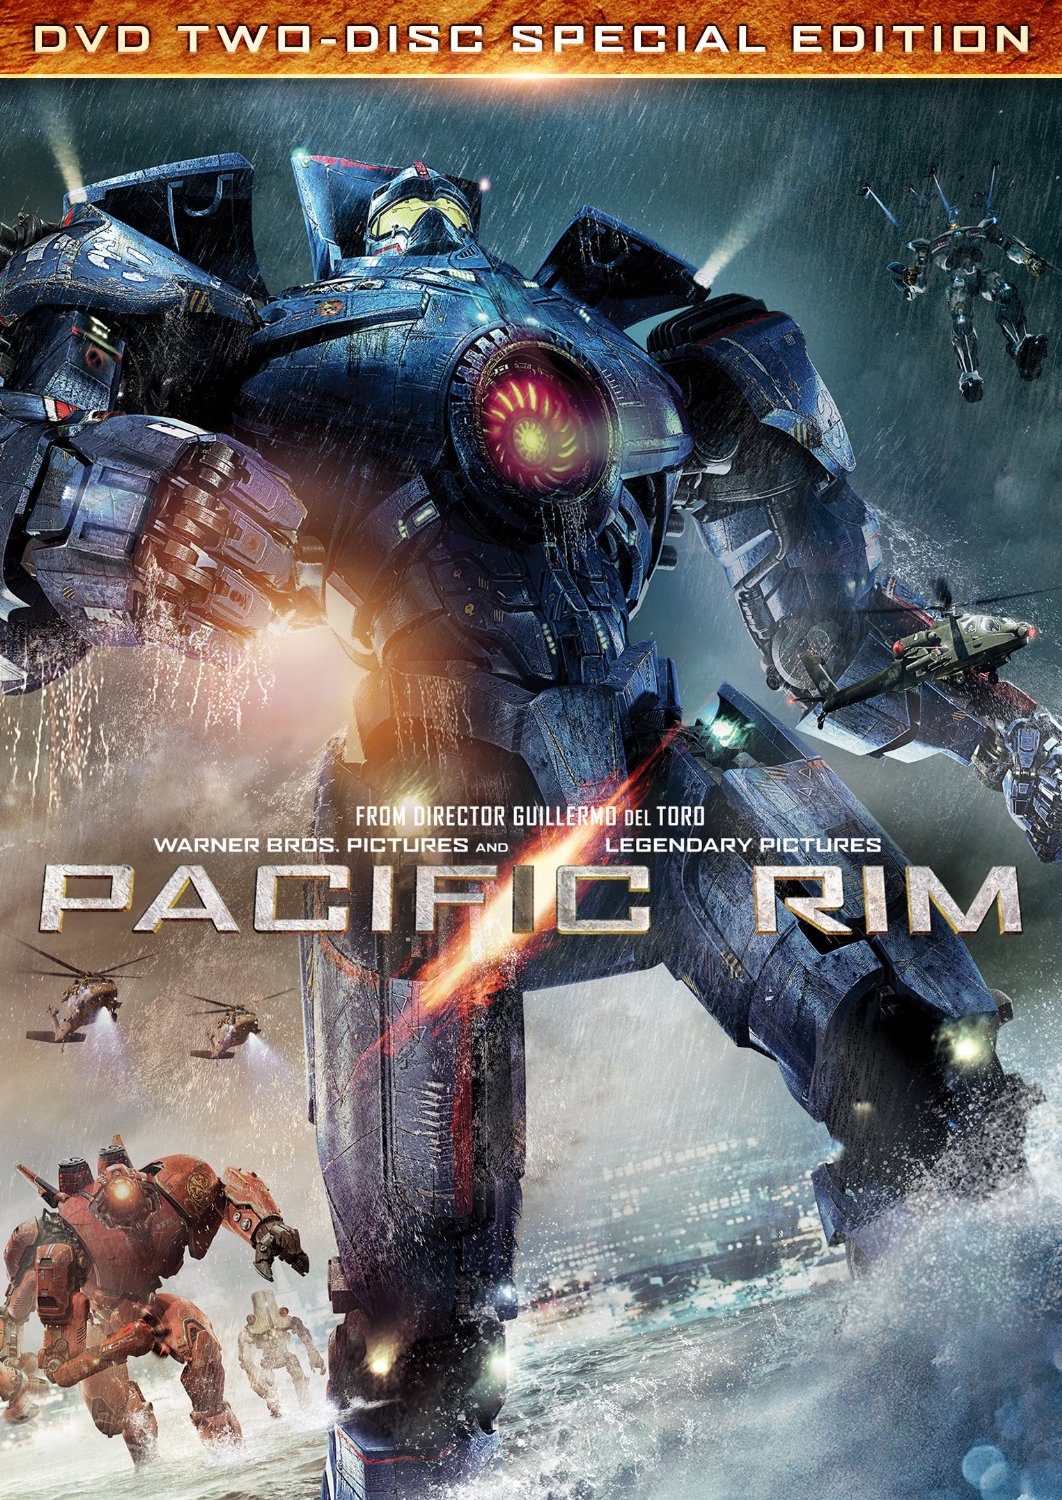 Pacific Rim - Uprising (English) Download 720p Movie _BEST_ sssssssssssss0202020vbx36fd